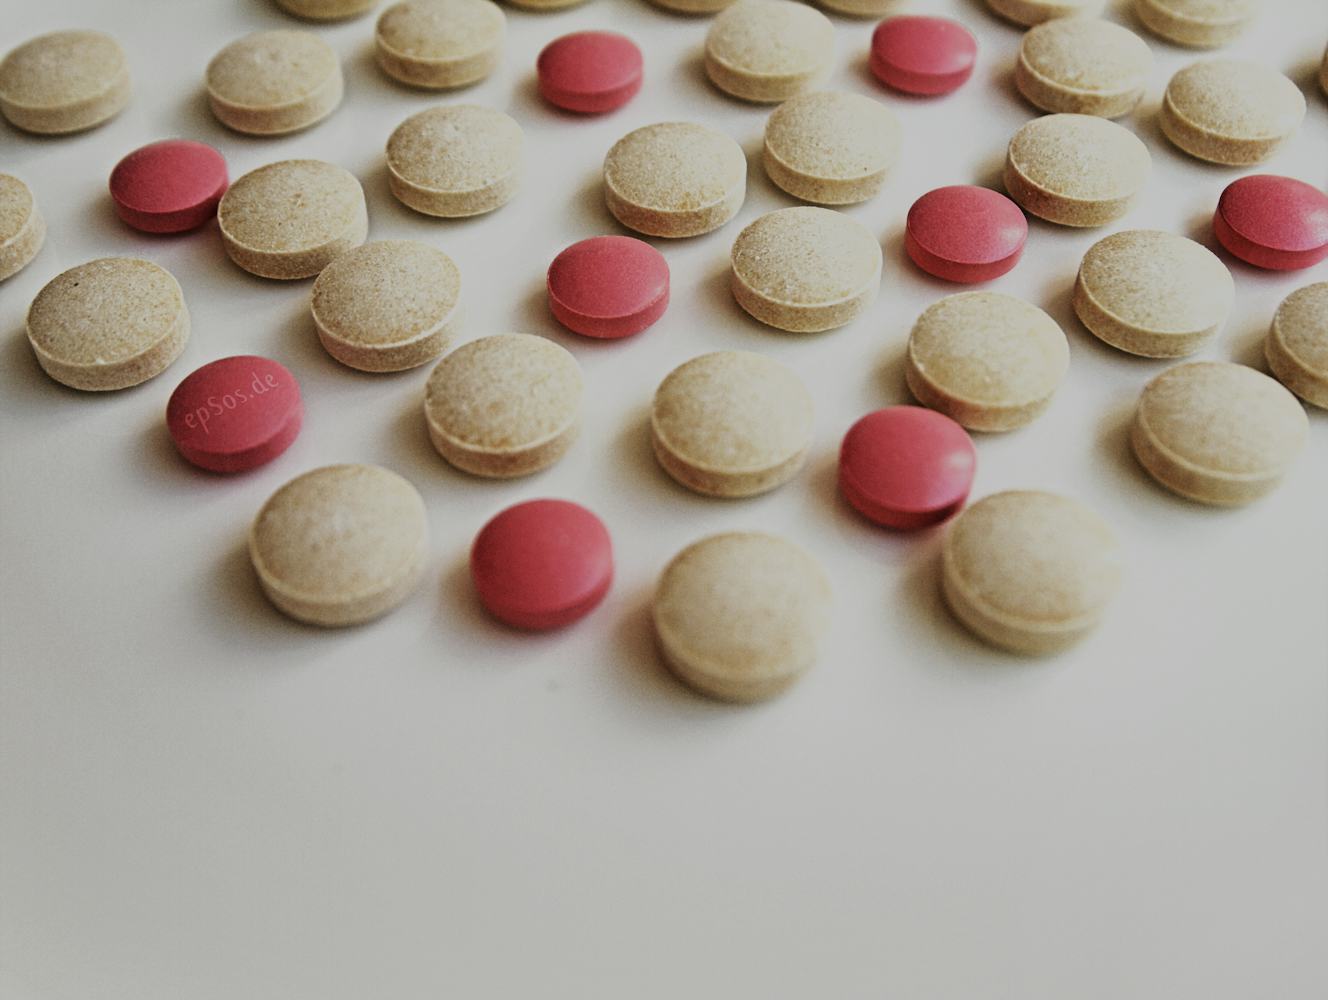 Narcolepsy Medication Modafinil is the World's First "Safe" Smart Drug